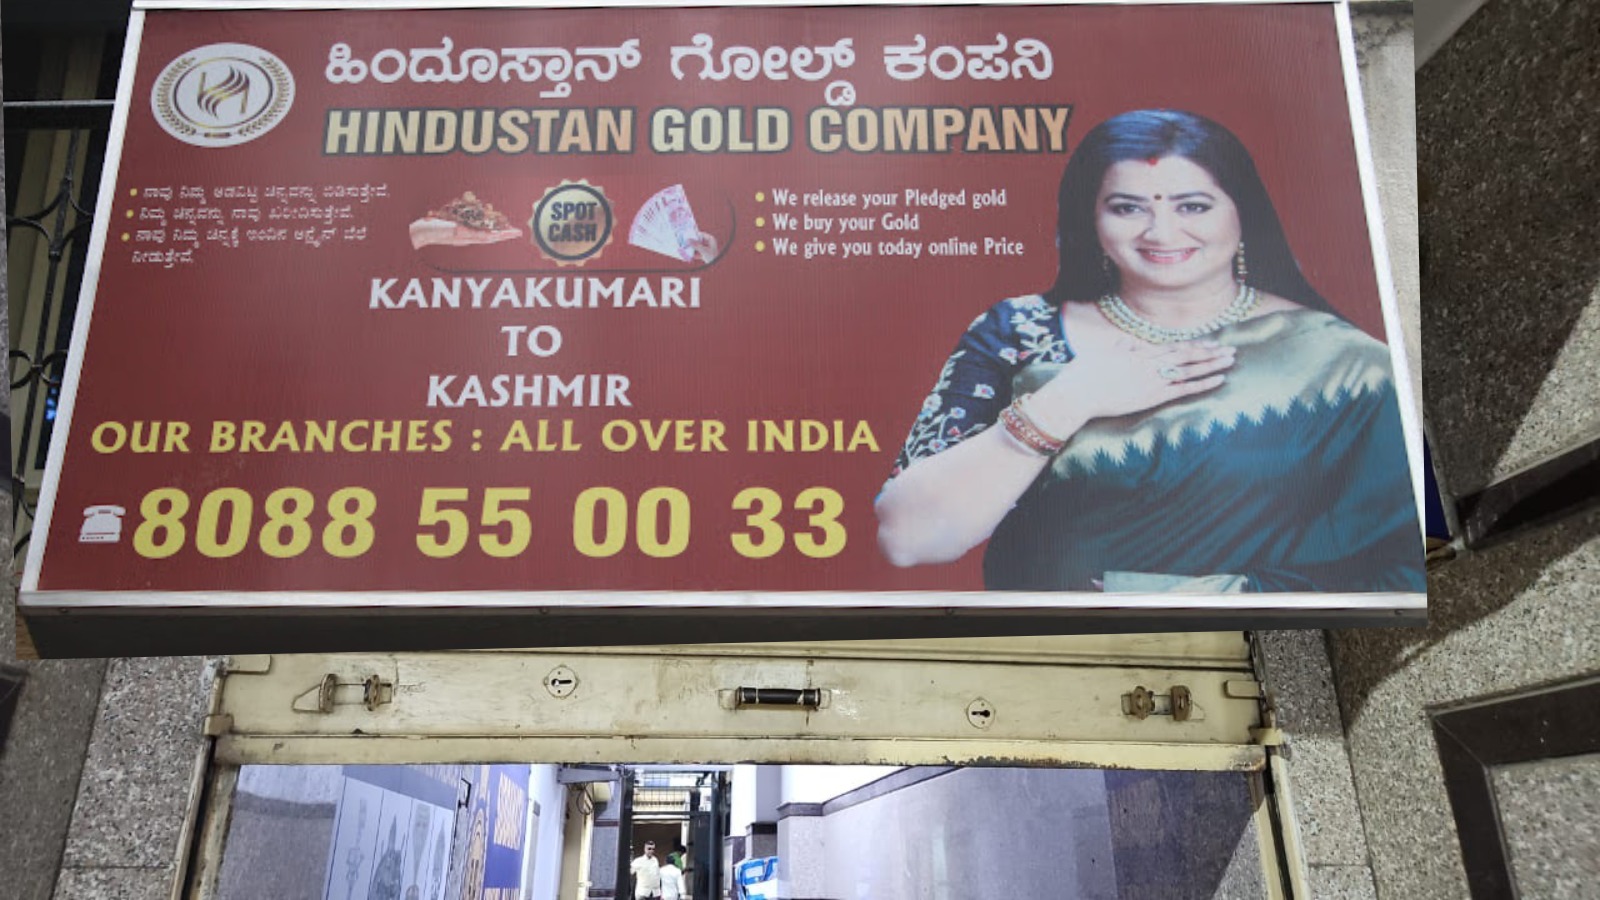 Hindustan Gold Company - Majestic